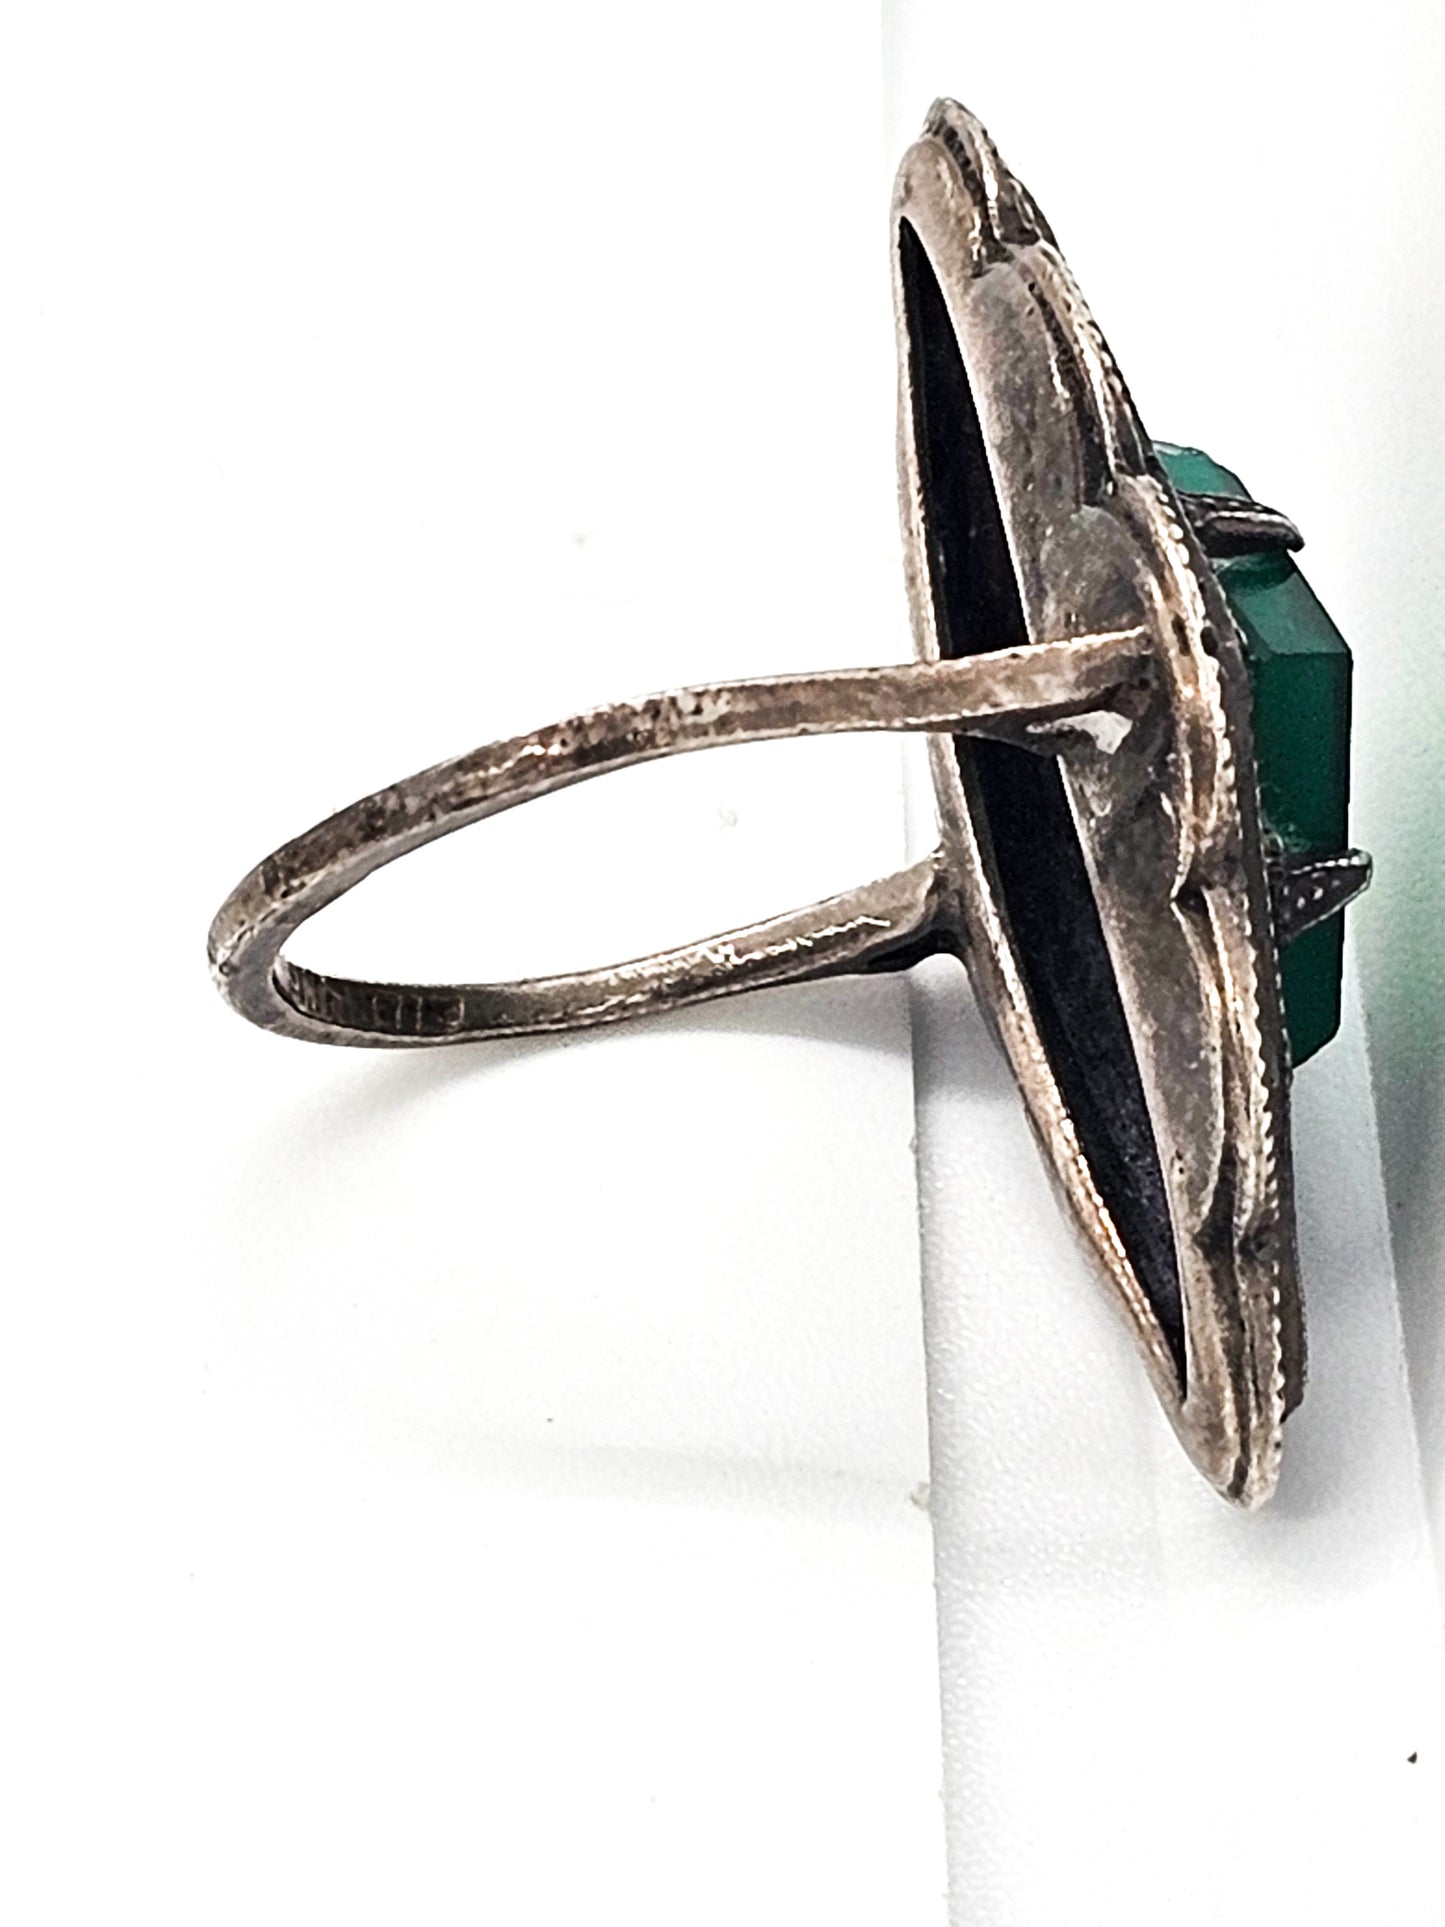 Chrysoprase green gem antique Art Deco Marcasite large sterling silver ring size 6.5